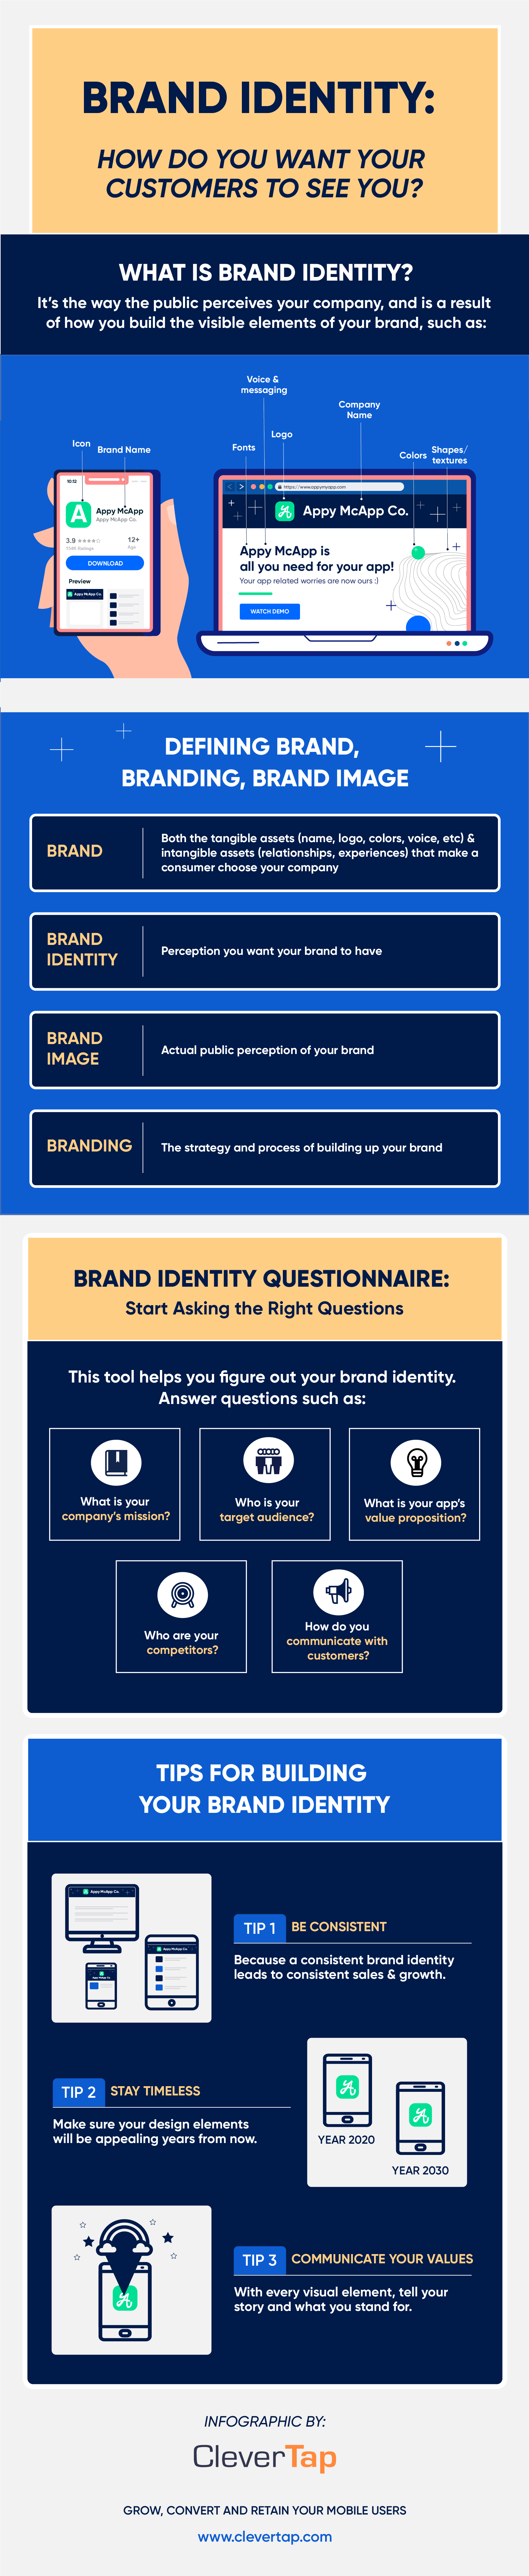 Brand Identity infographic